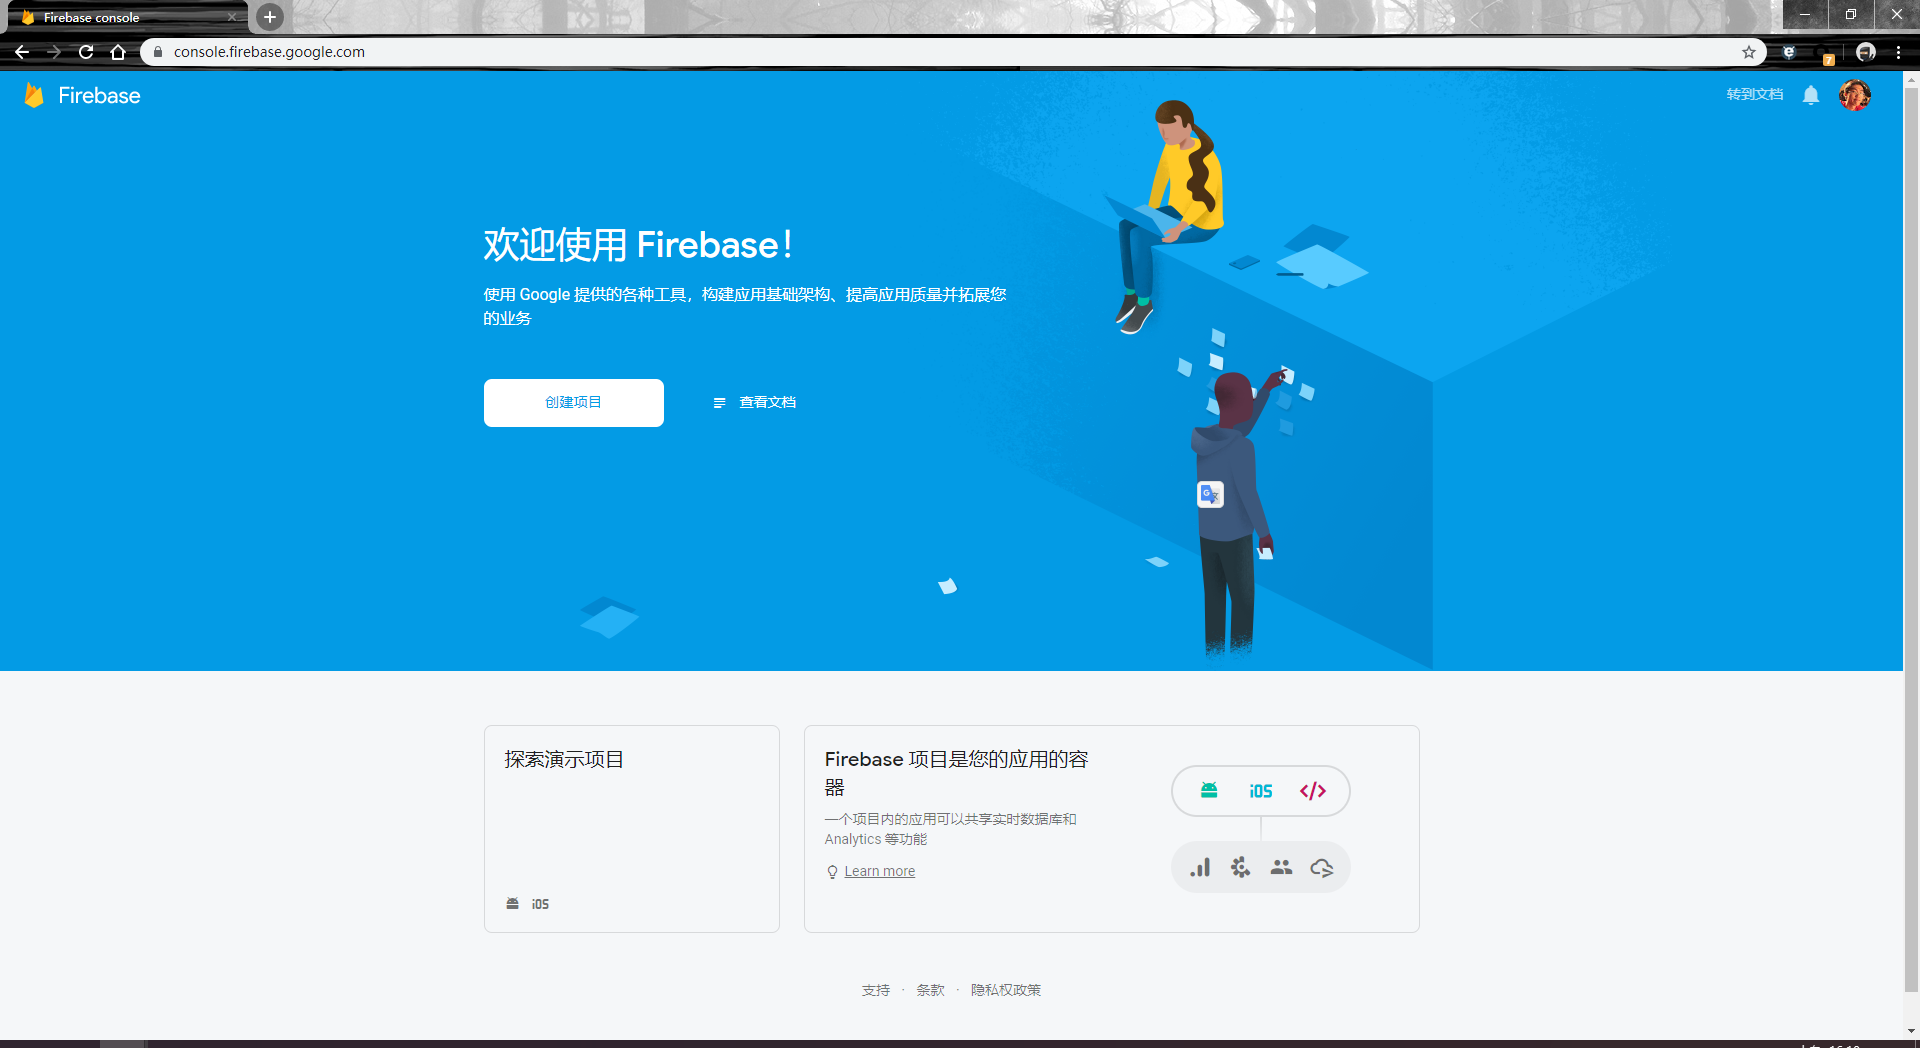 Firebase homepage